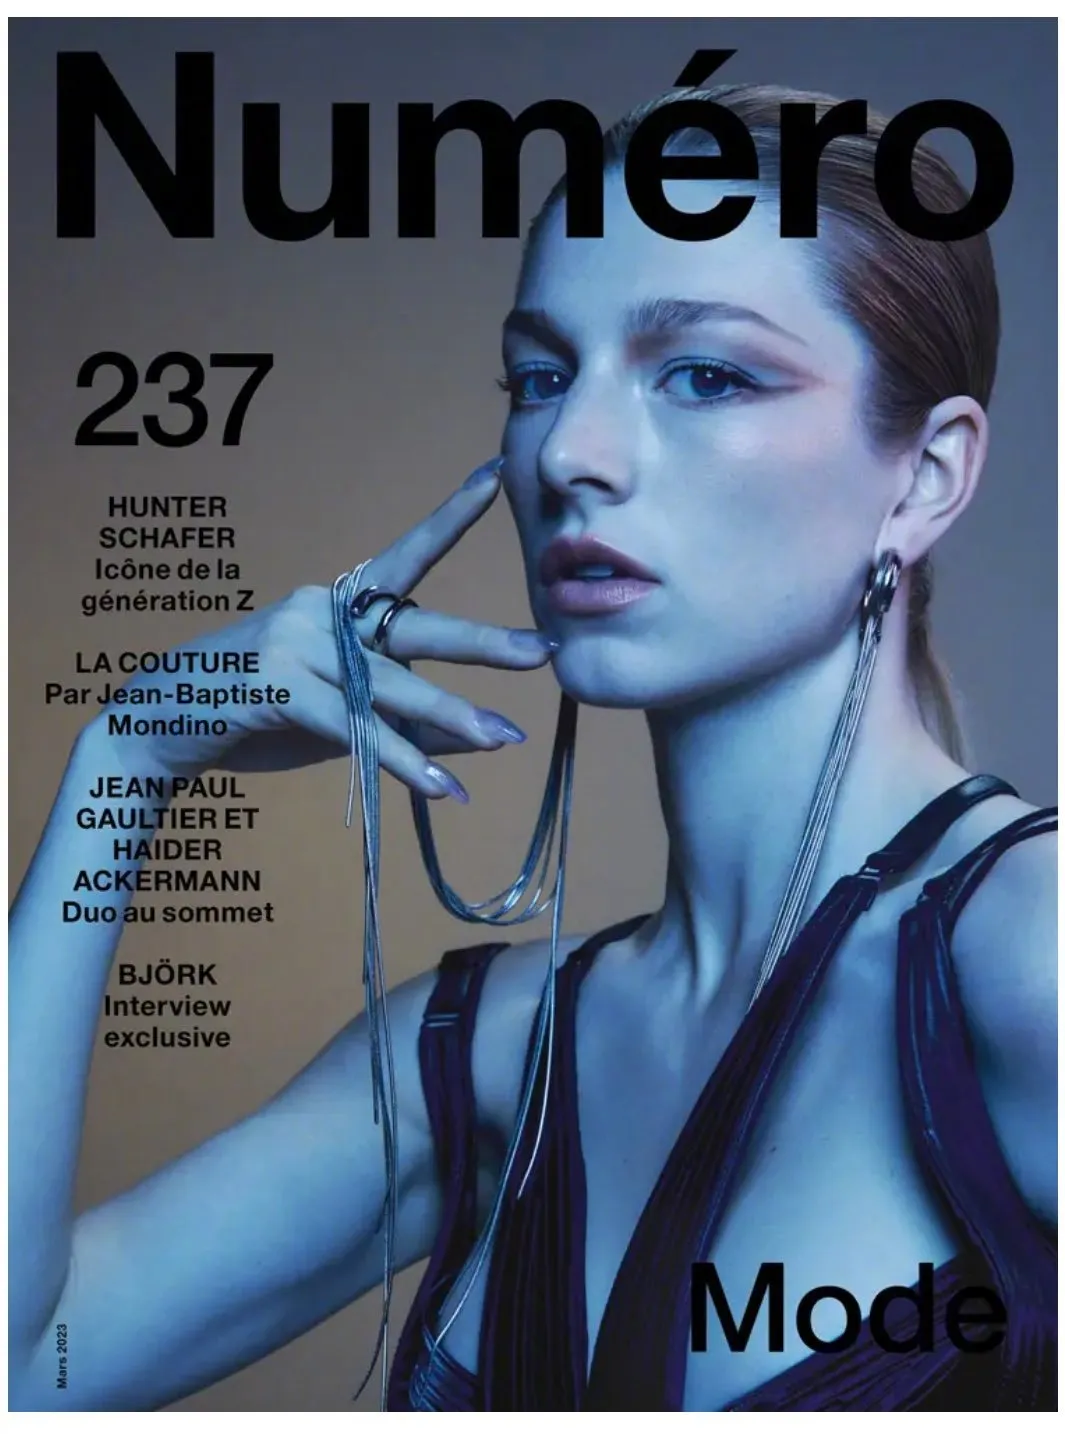 Hunter Schafer, new photoshoot for 'Numero' magazine | FMV6